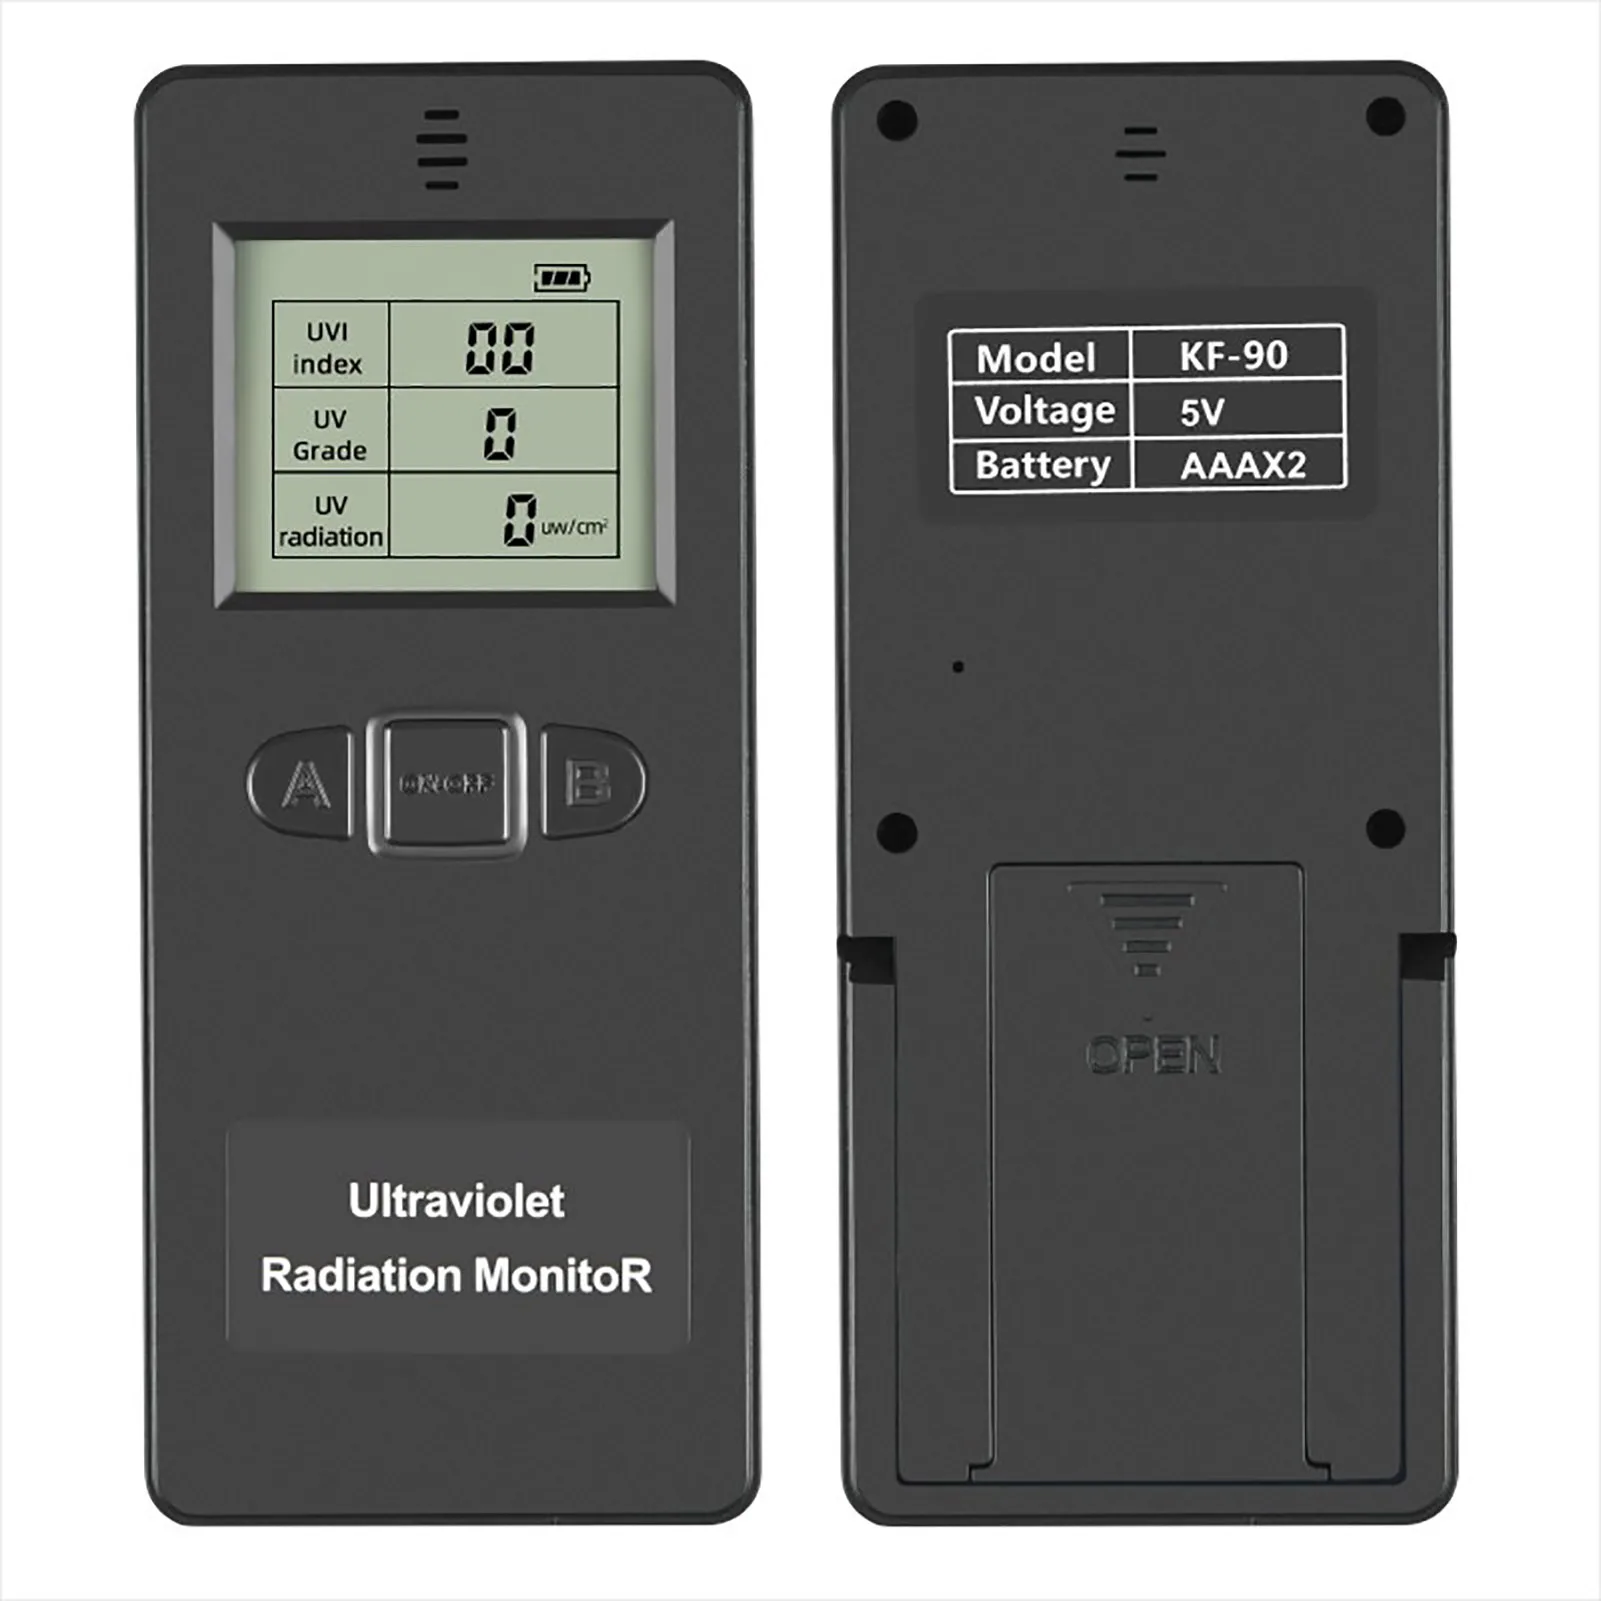 Digital Ultraviolet Radiation Detector UV UVI Meter Dosimeter Tester Counter With Temperature Display For Home Outdoor UV Meter